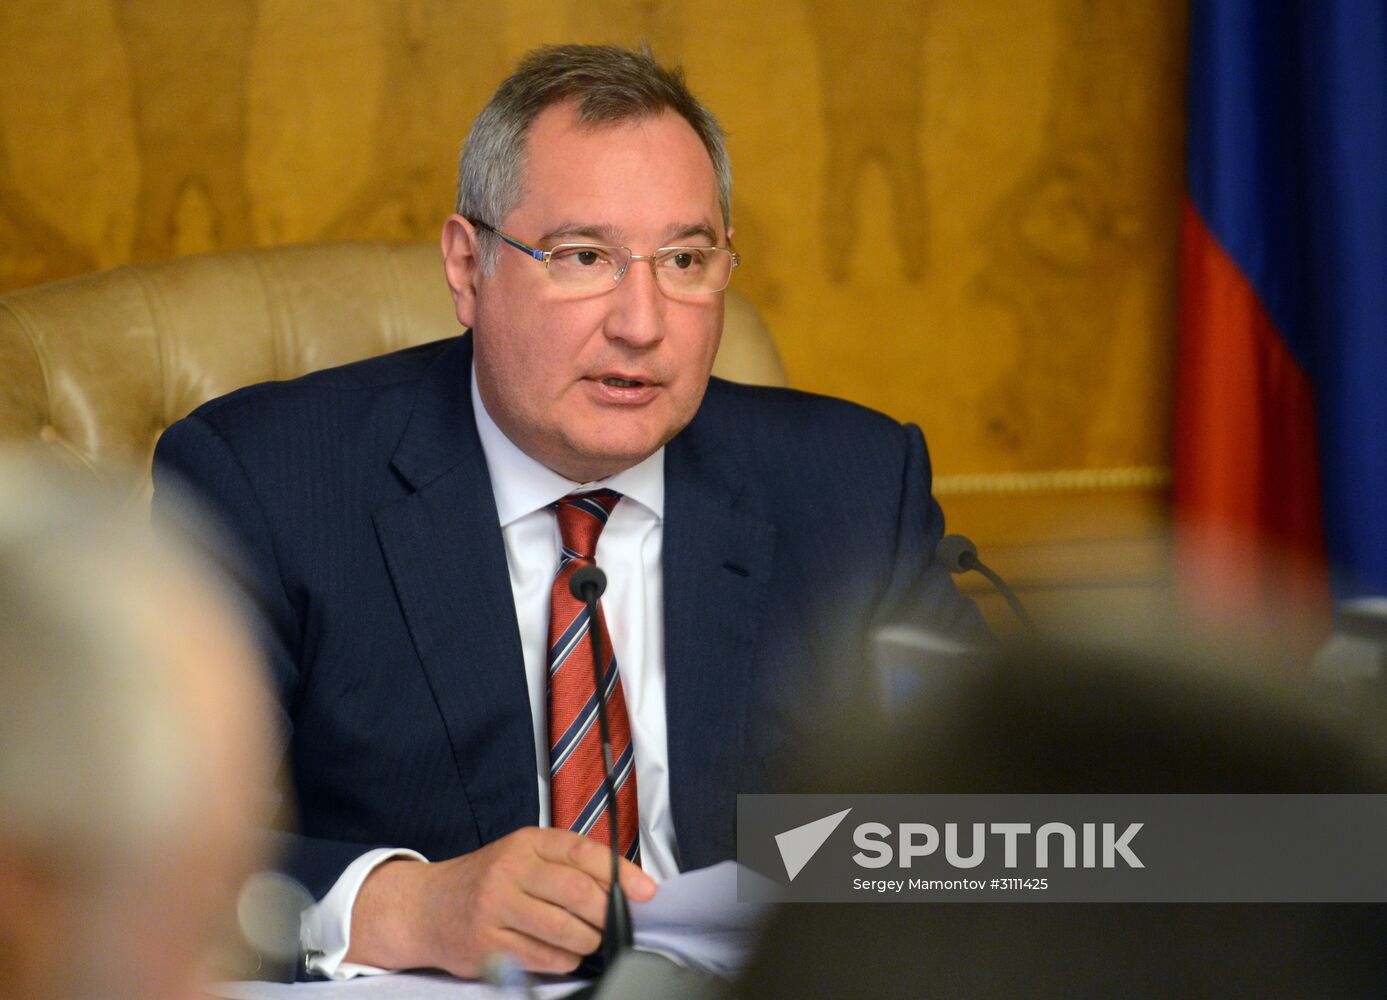 Deputy Prime Minister Dmitry Rogozin chairs Marine Board meeting